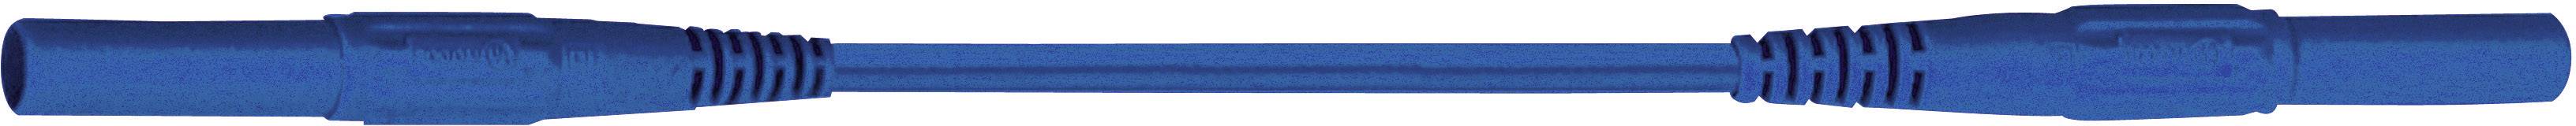 MULTICONTACT Sicherheits-Messleitung [ Lamellenstecker 4 mm - Lamellenstecker 4 mm] 1.50 m Blau Mult